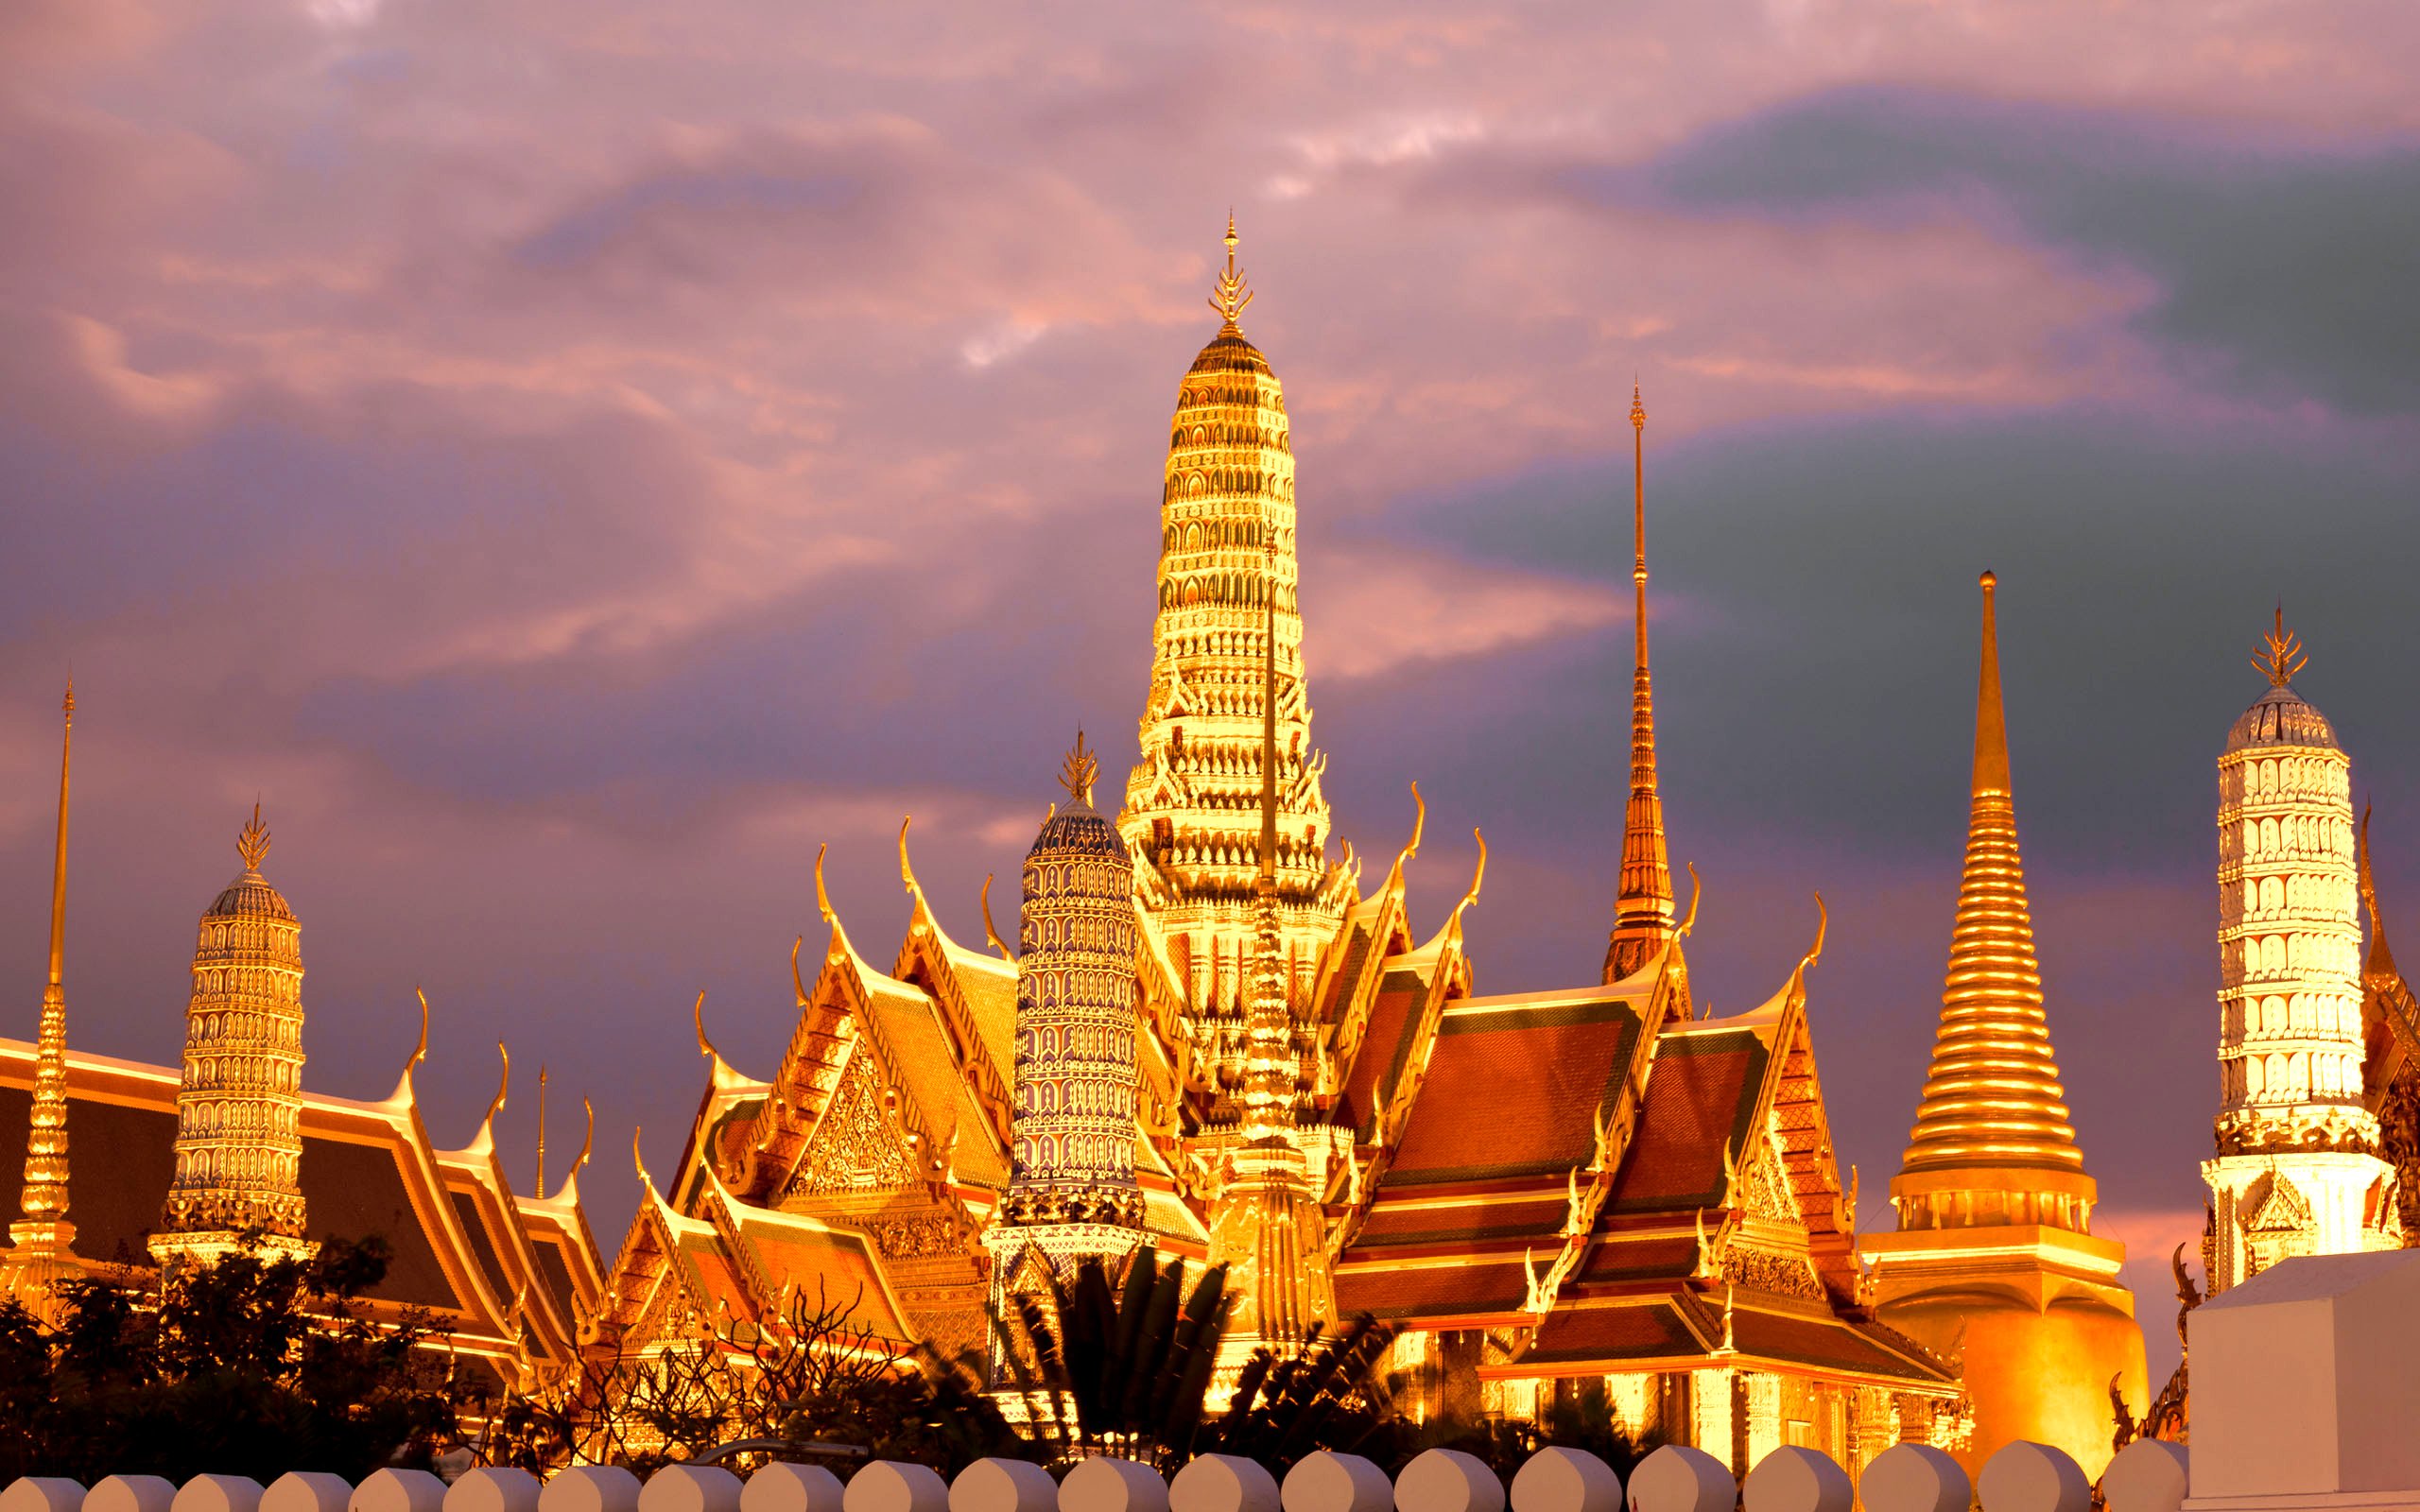 Temples in Bangkok Google image from https://thailandculturetravel.com/wp-content/uploads/2015/11/Amazing-Bagnkok.jpg